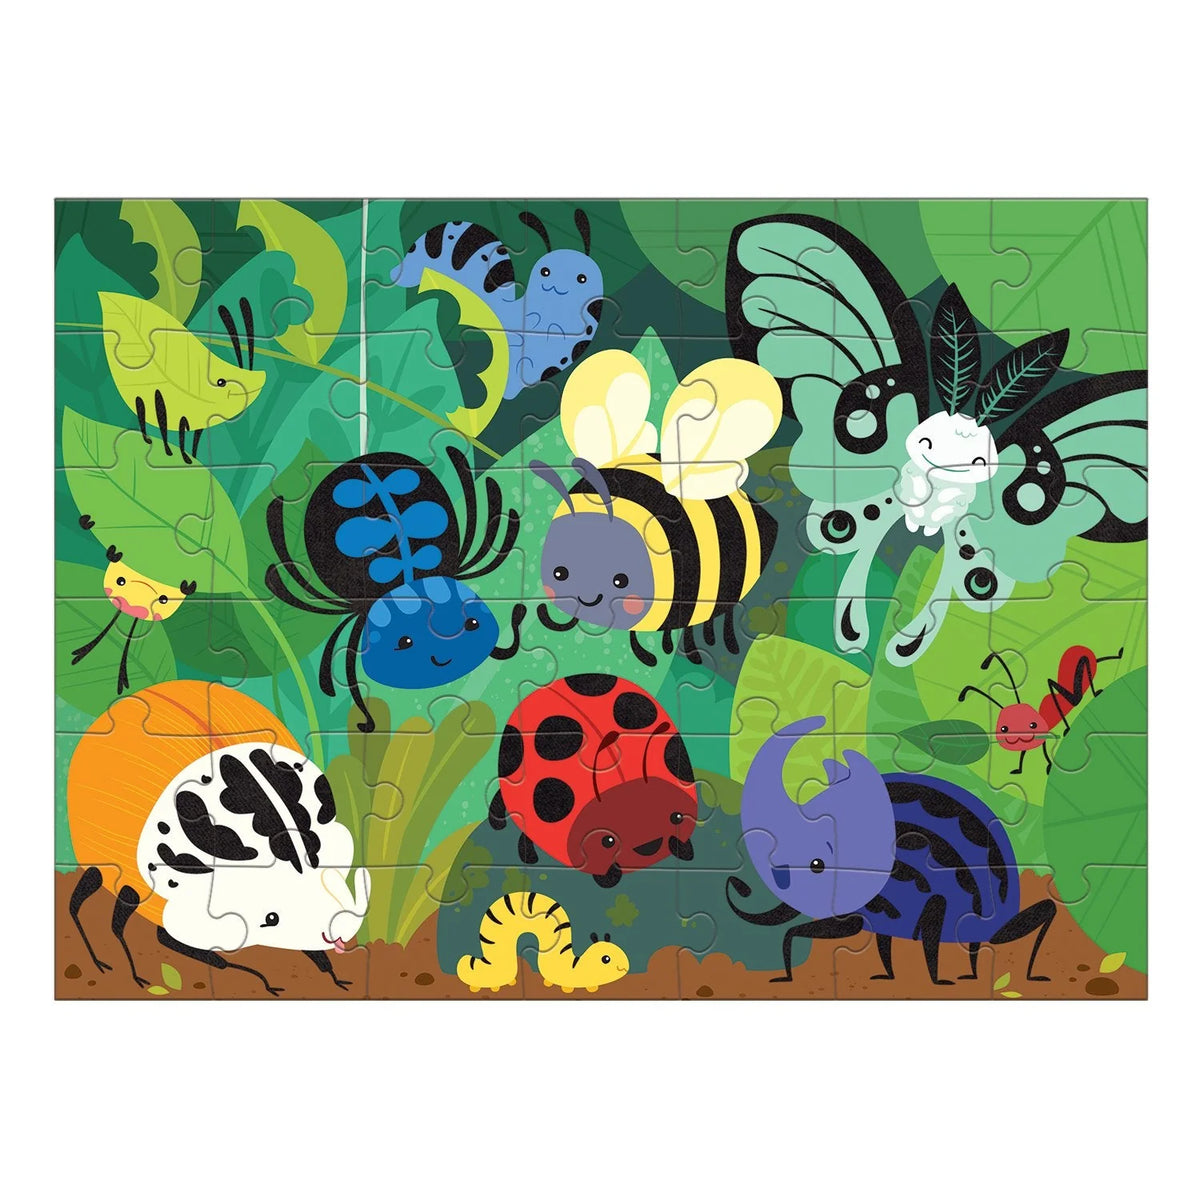 Mudpuppy Fuzzy Puzzle - Beetles & Bugs